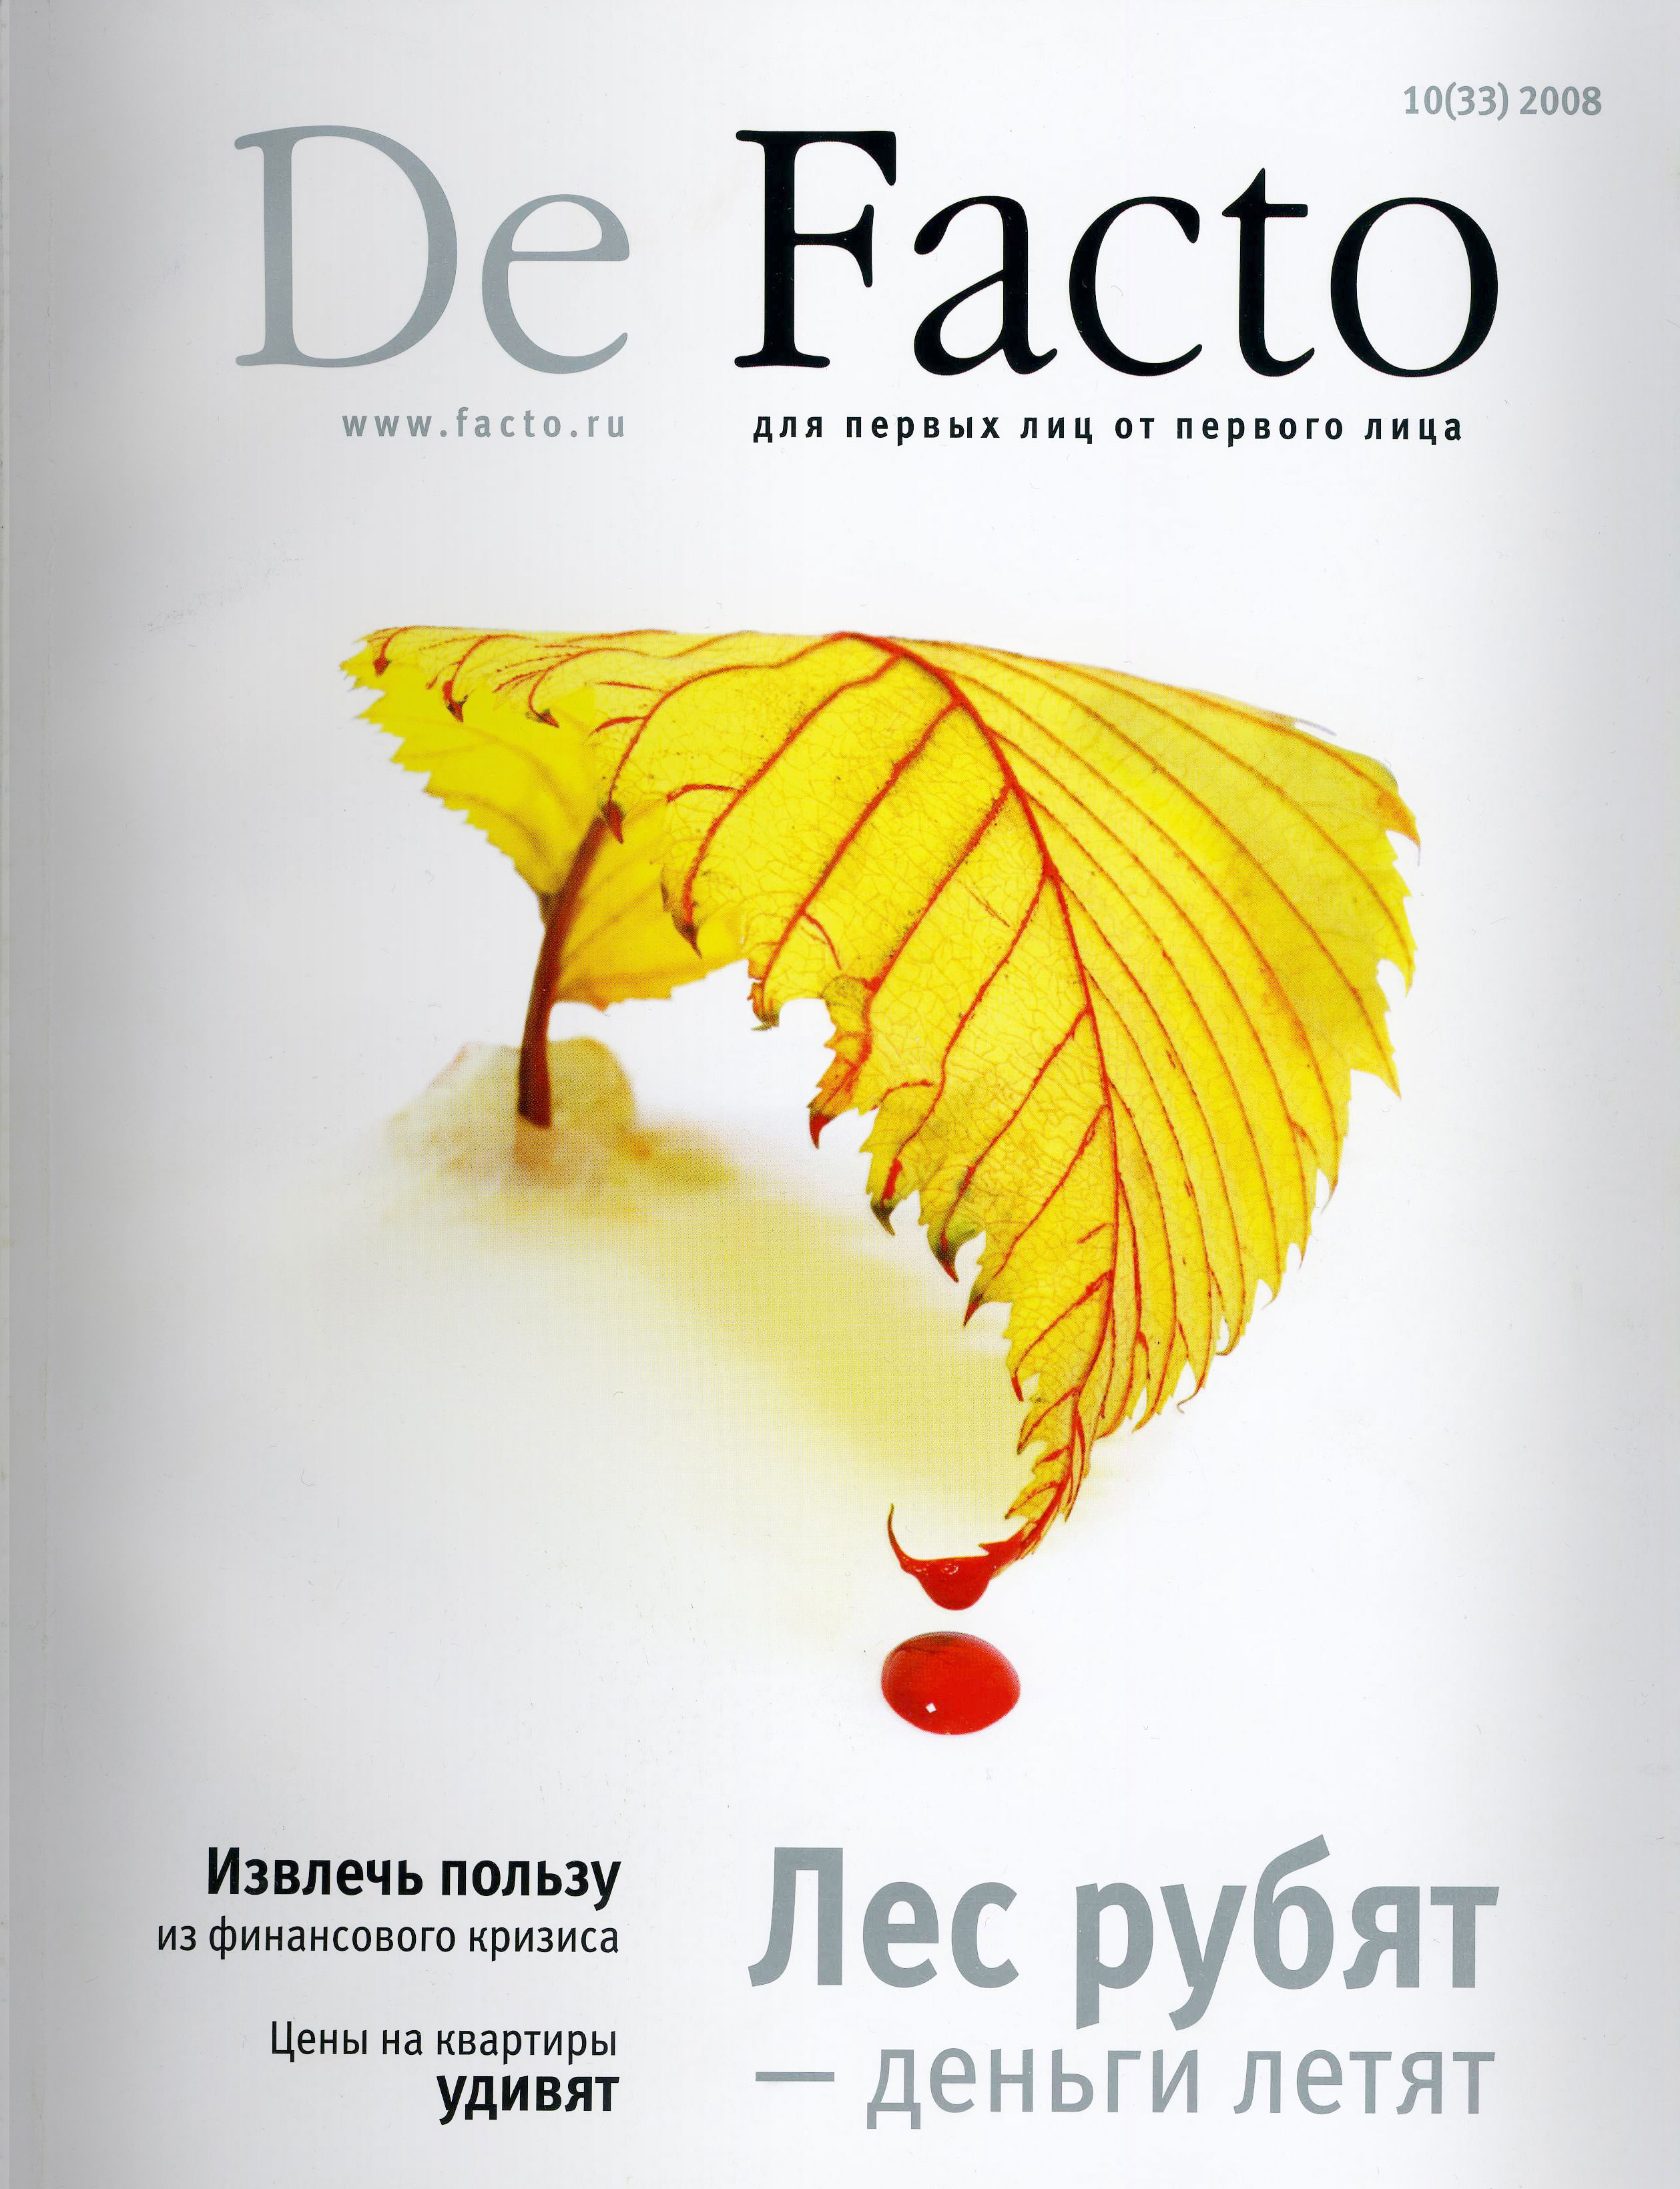 De Facto - обложка 2